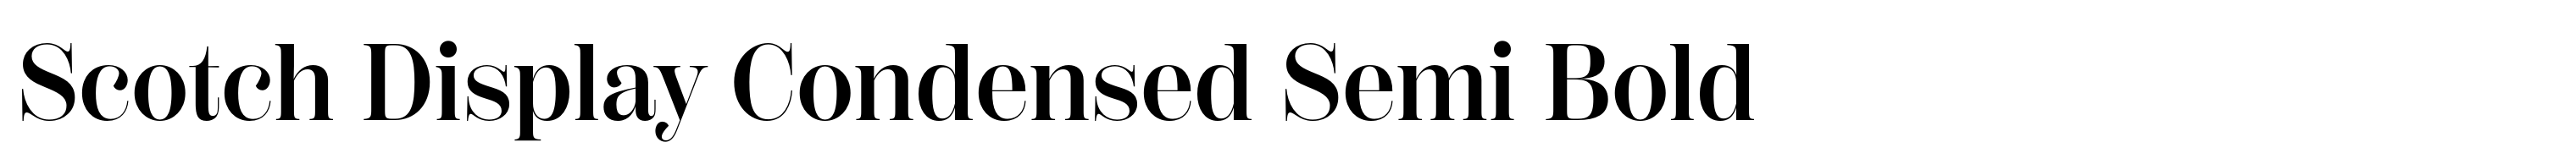 Scotch Display Condensed Semi Bold